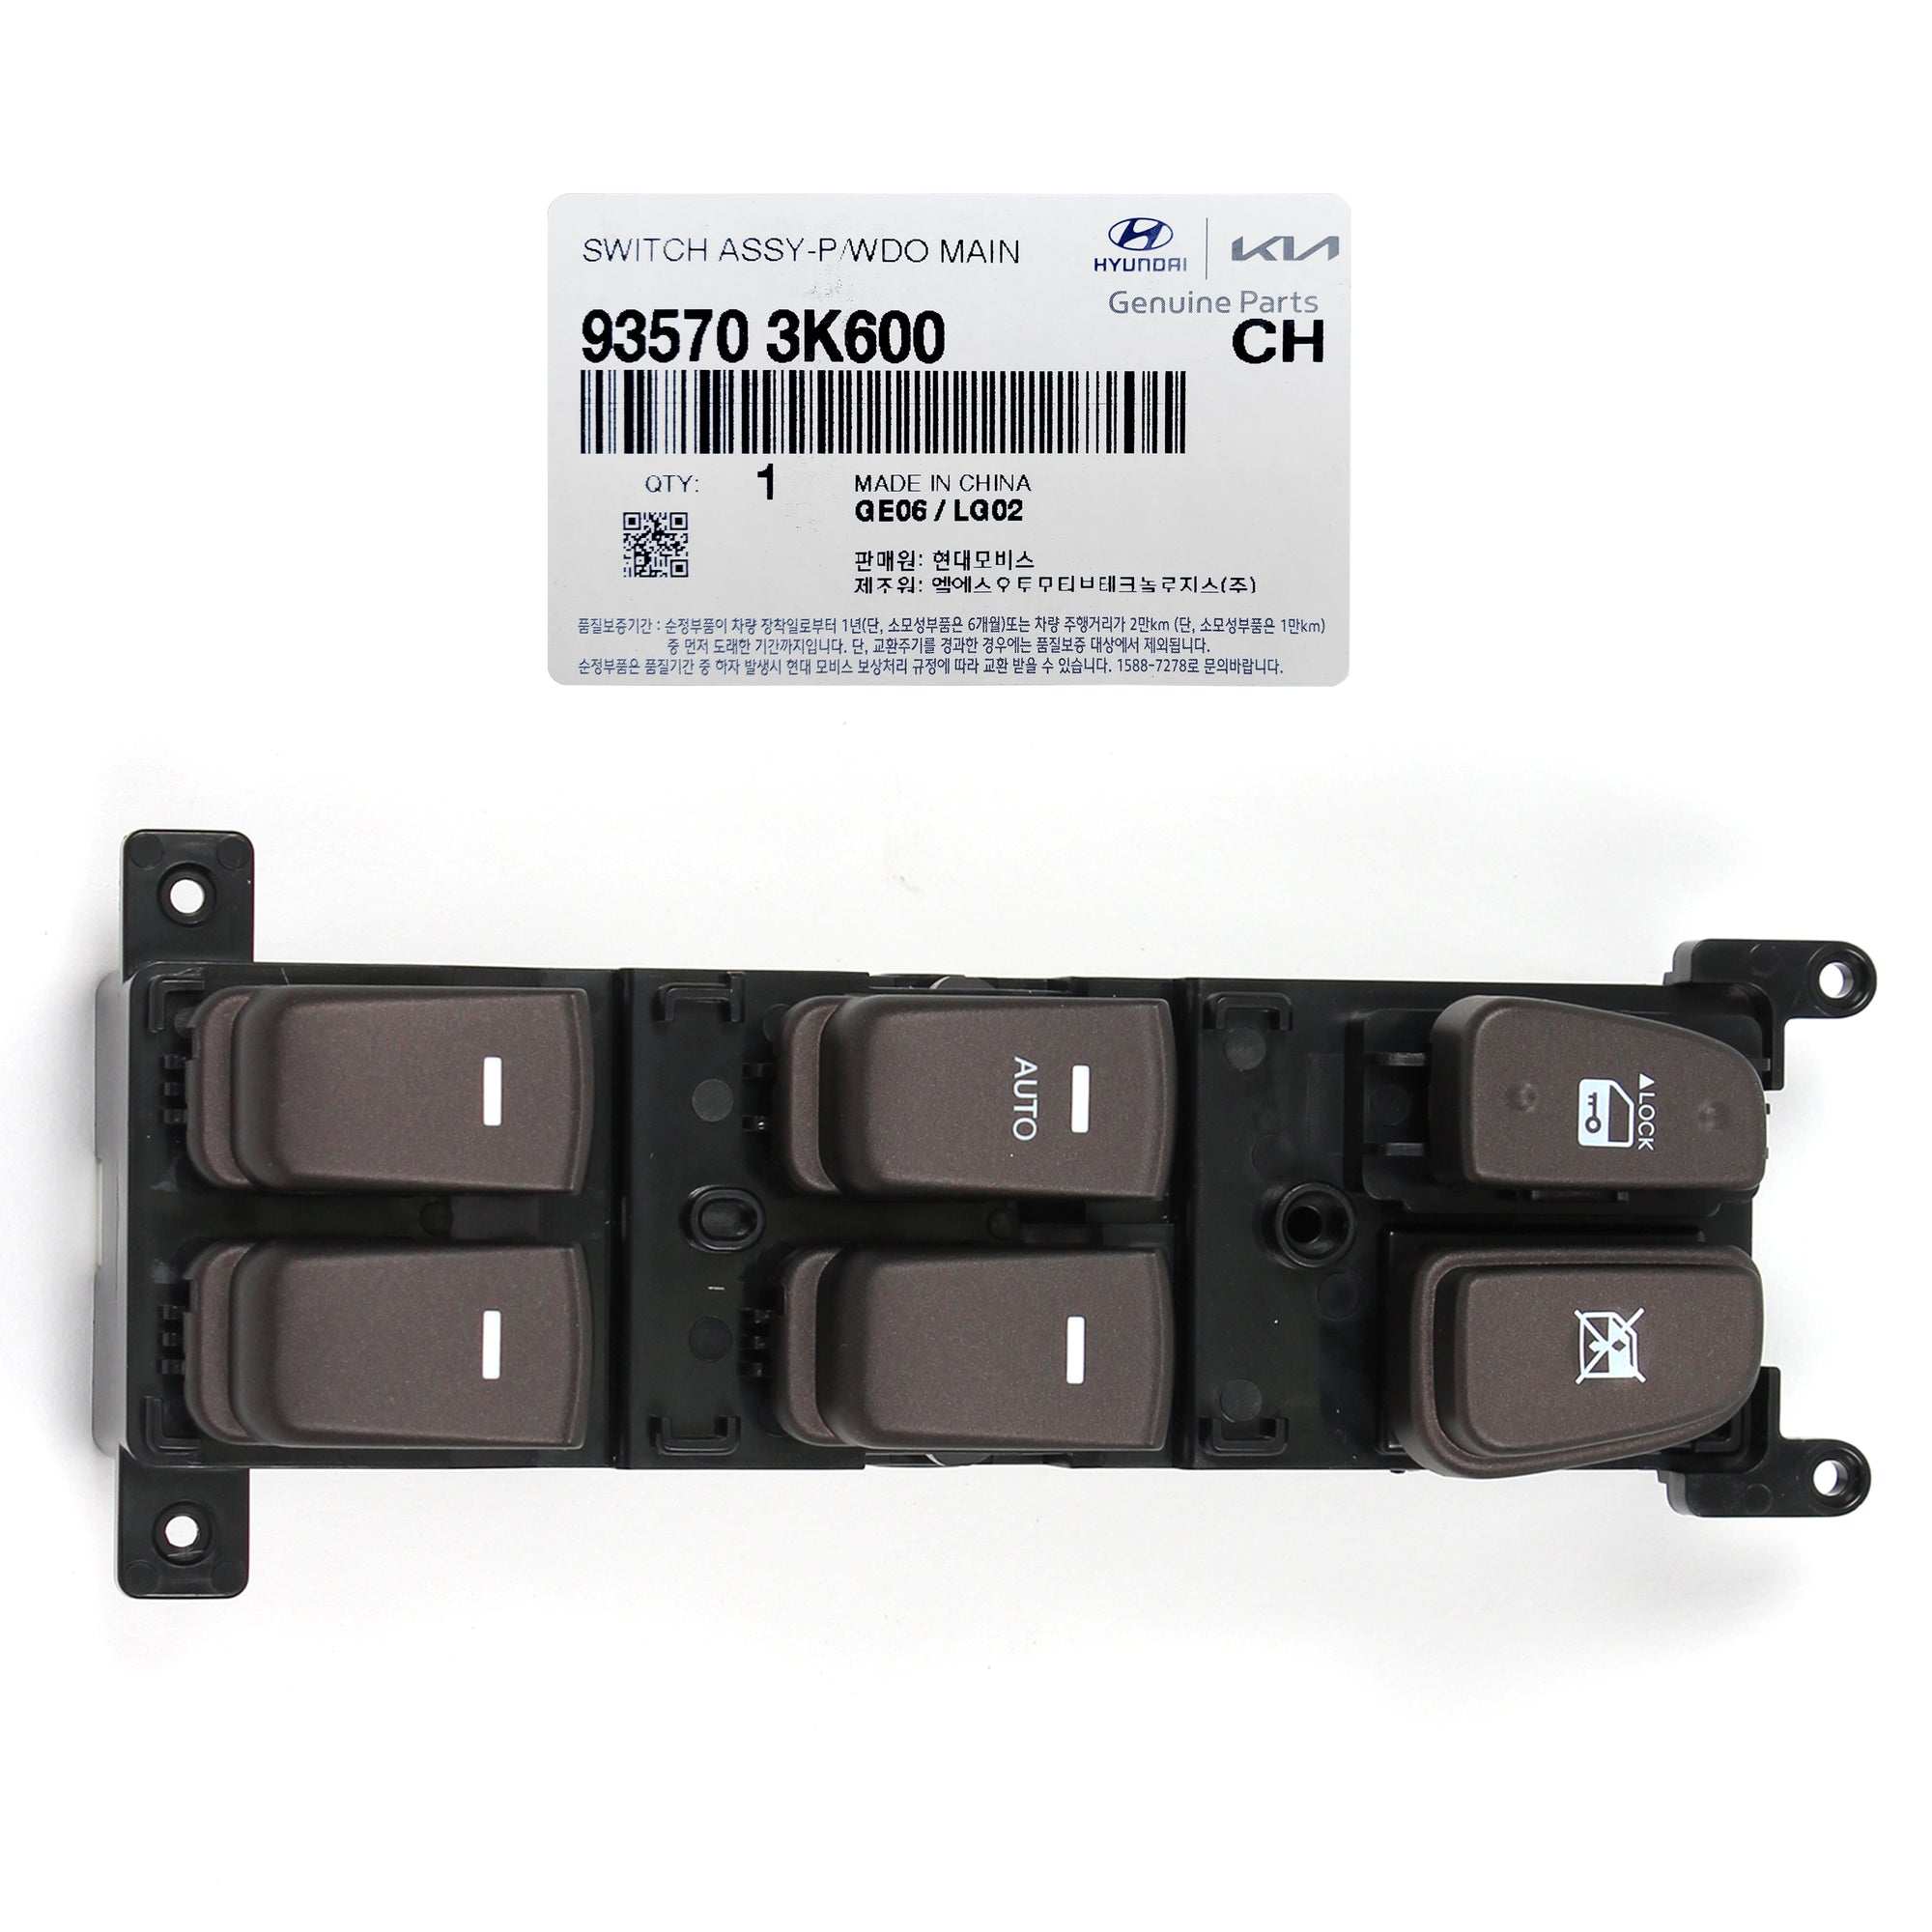 GENUINE Power Window Switch FRONT LEFT for 08-10 Hyundai Sonata 935703K600